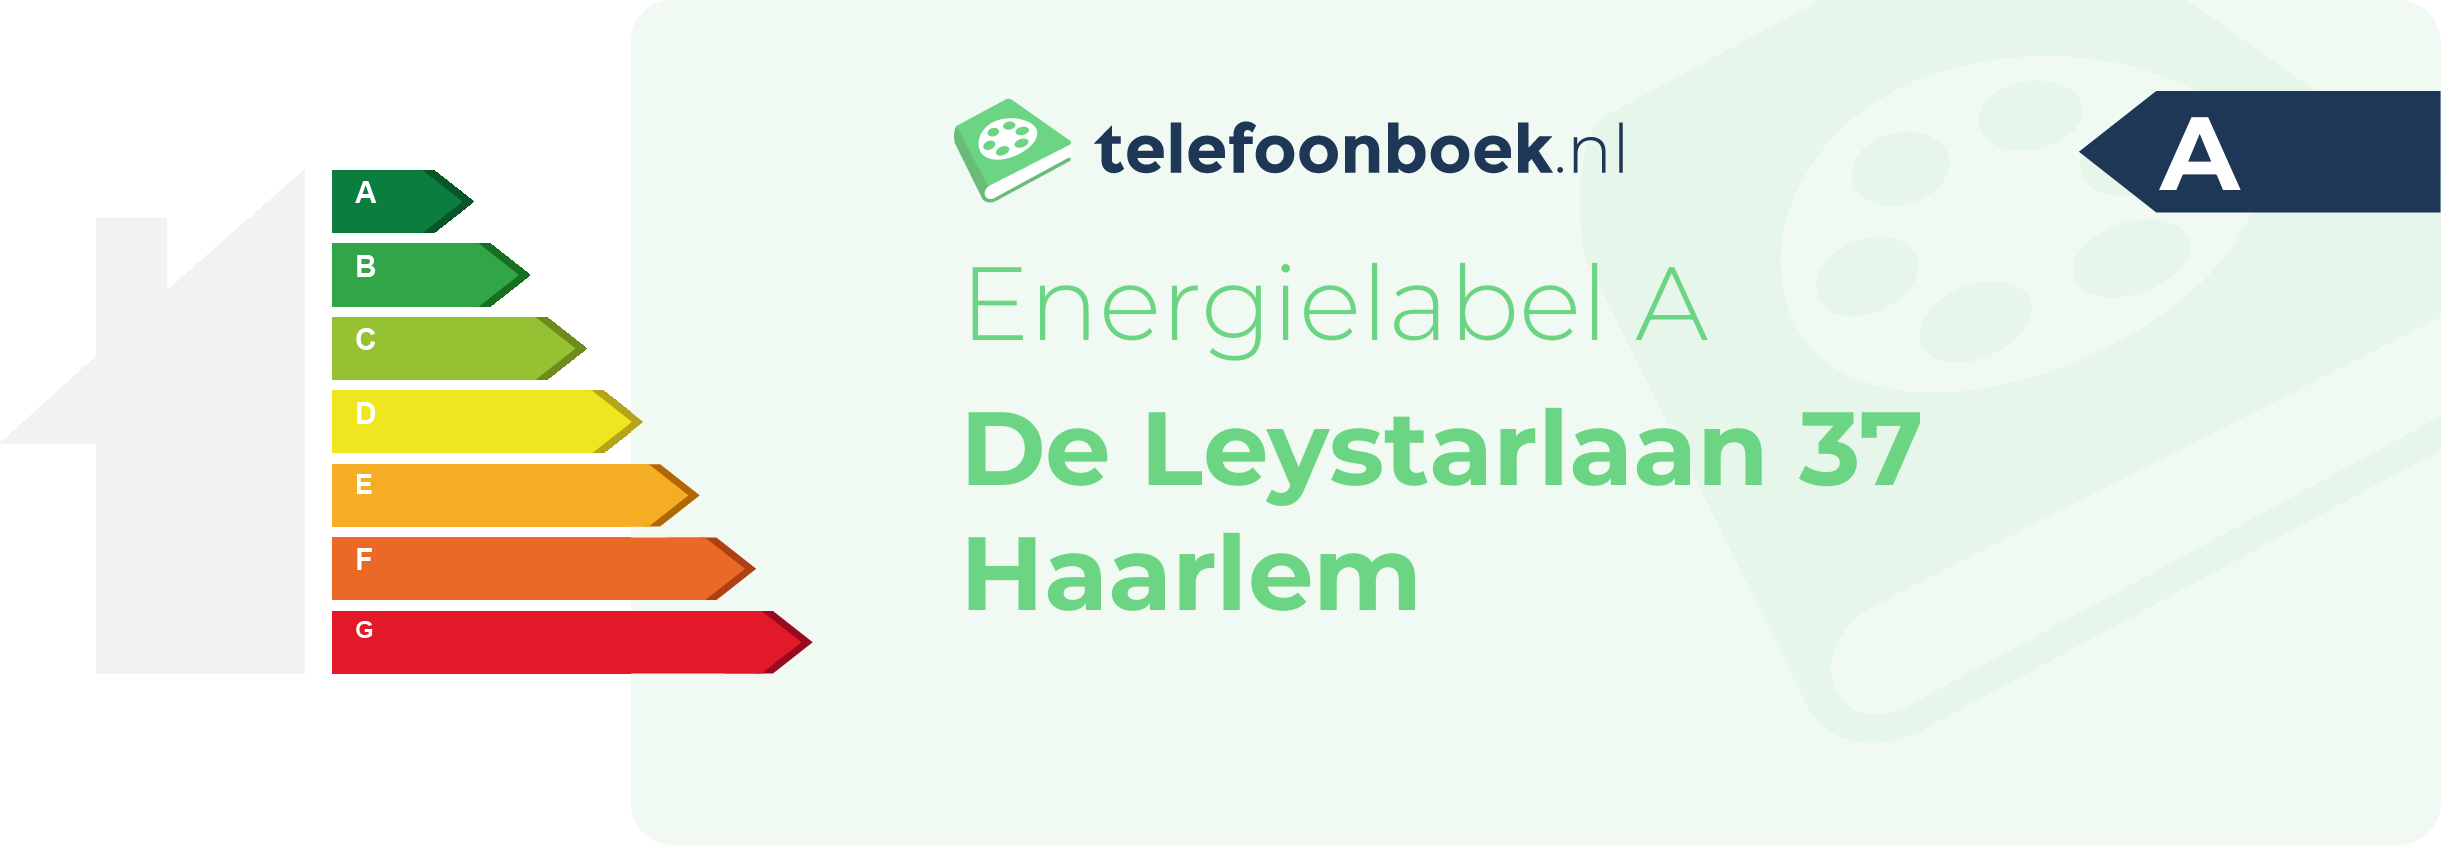 Energielabel De Leystarlaan 37 Haarlem